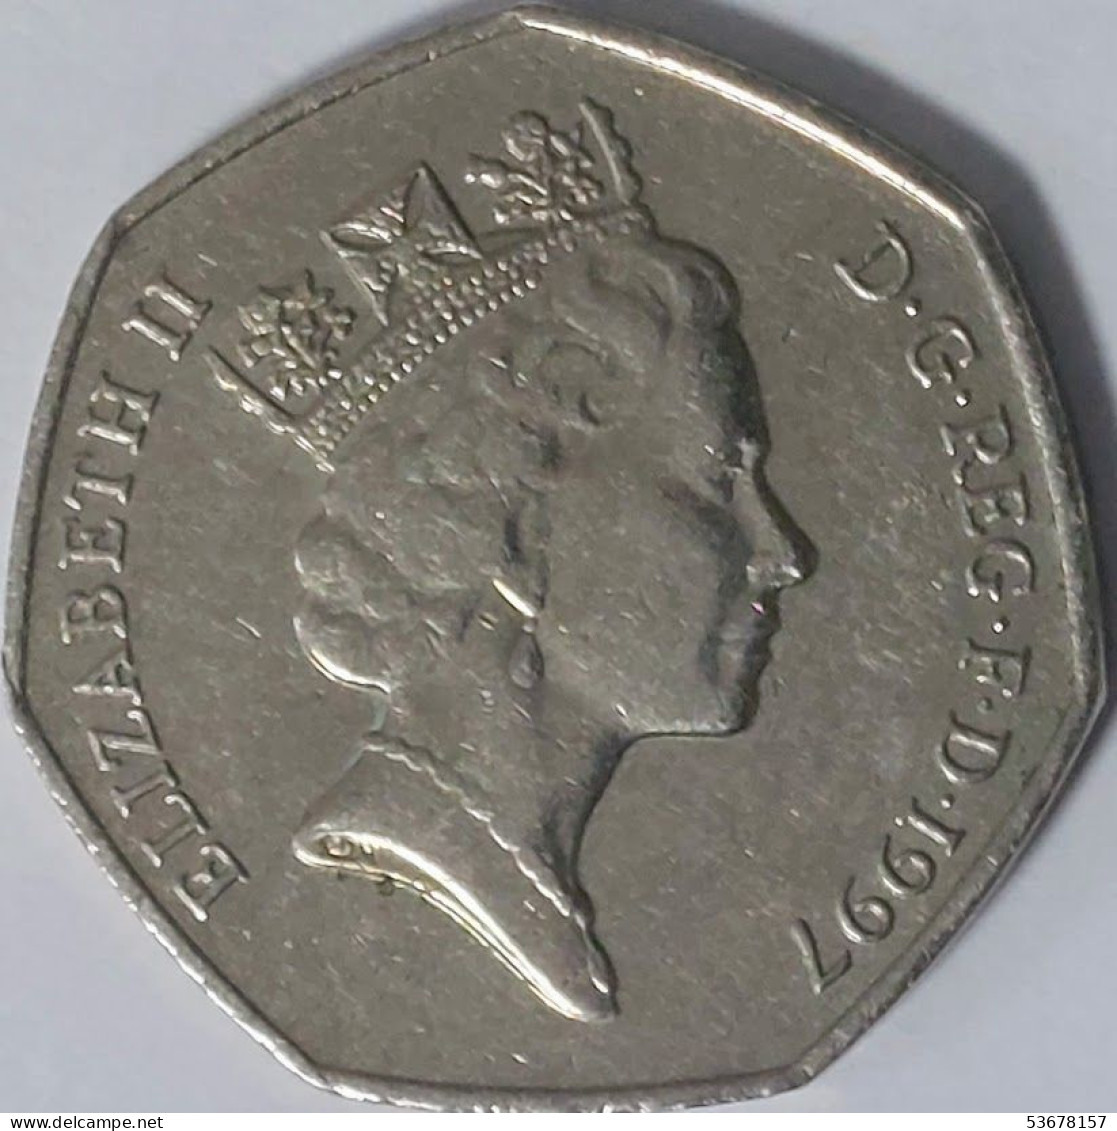 Great Britain - 50 Pence 1997, KM# 940.2 (#2335) - 50 Pence